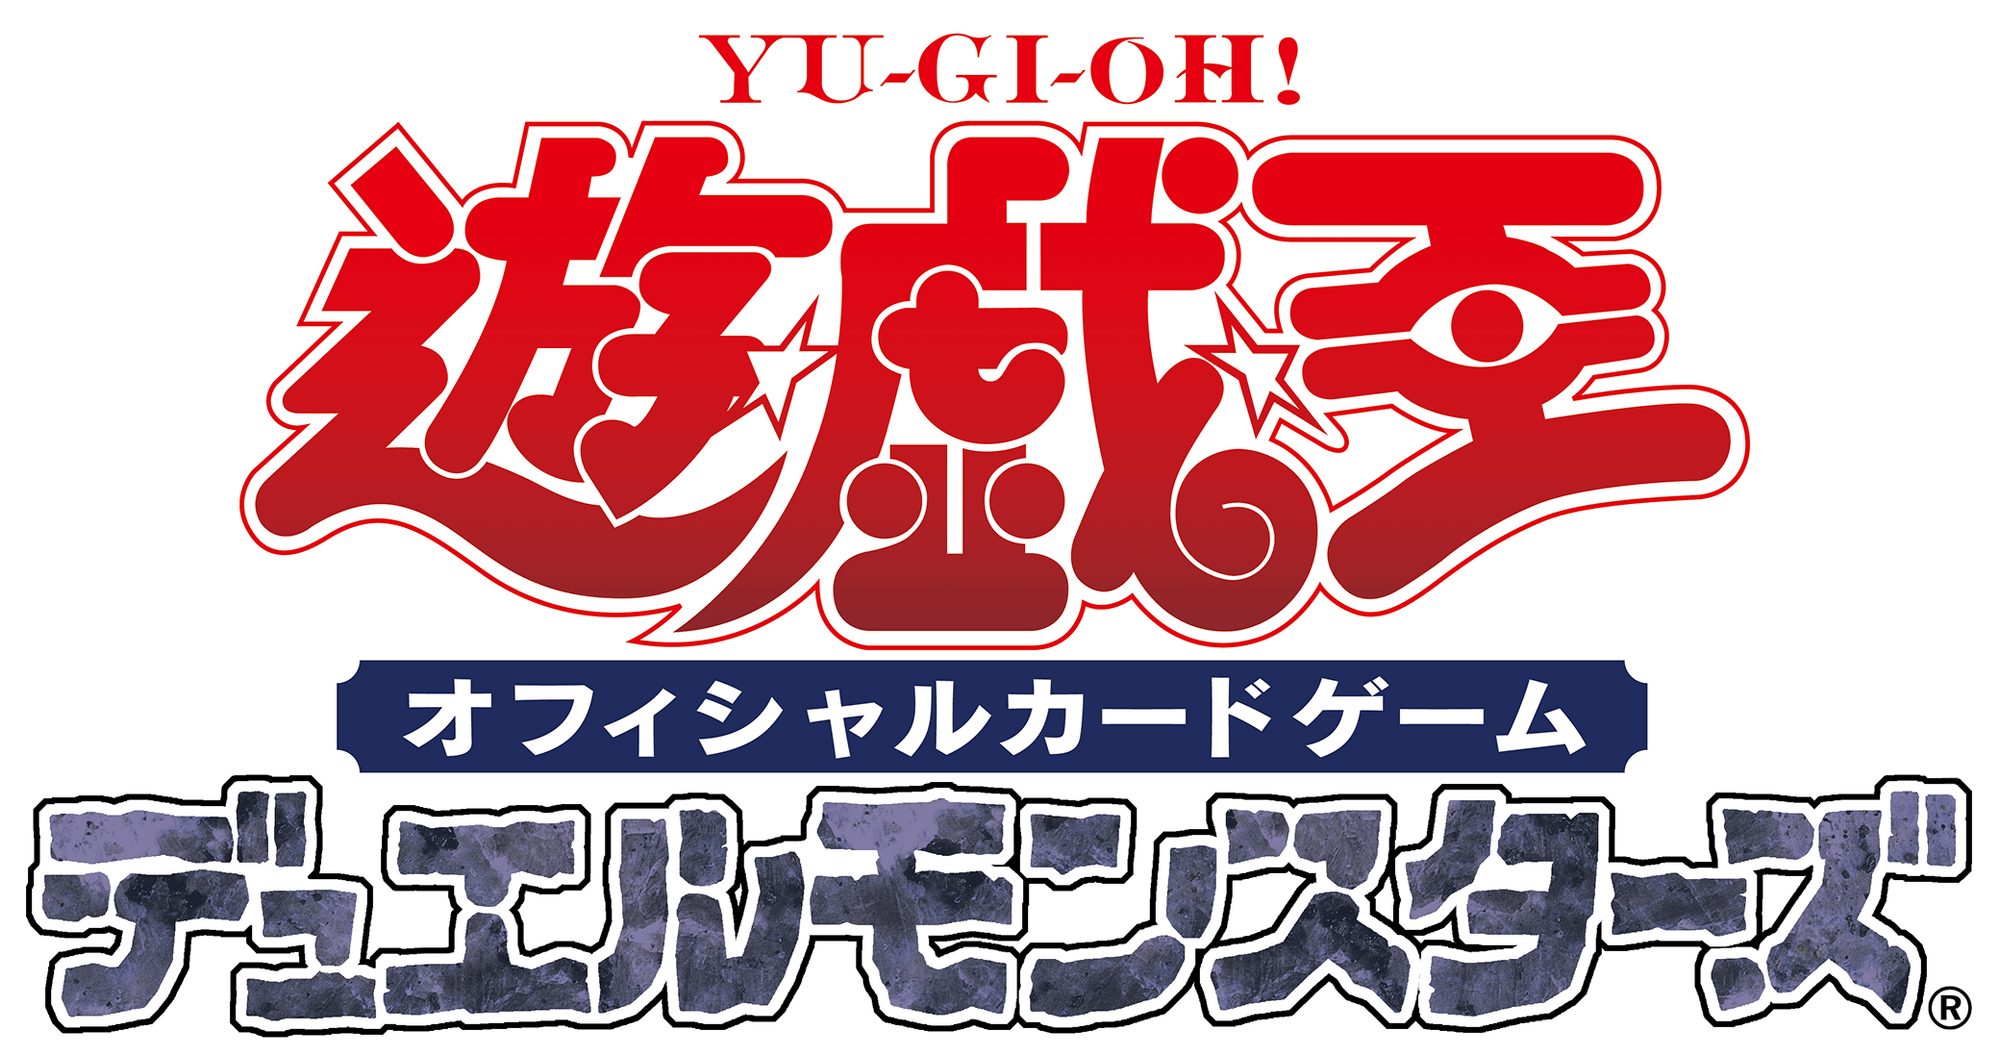 Yu Gi Oh Official Card Game Yu Gi Oh Wiki Fandom